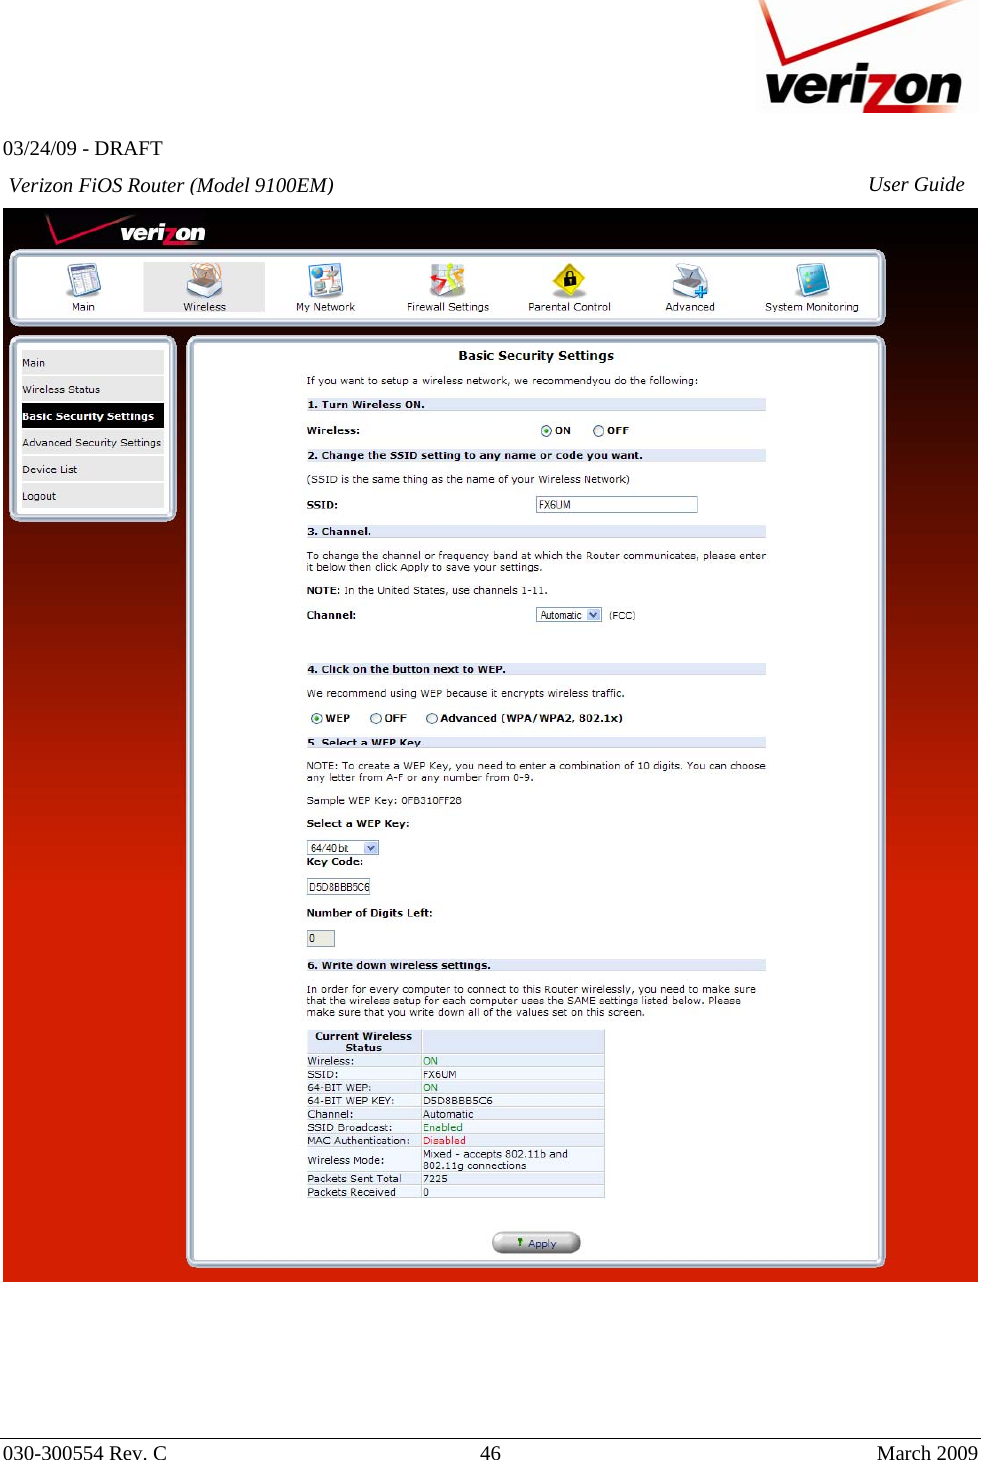   03/24/09 - DRAFT   030-300554 Rev. C  46      March 2009  Verizon FiOS Router (Model 9100EM) User Guide       